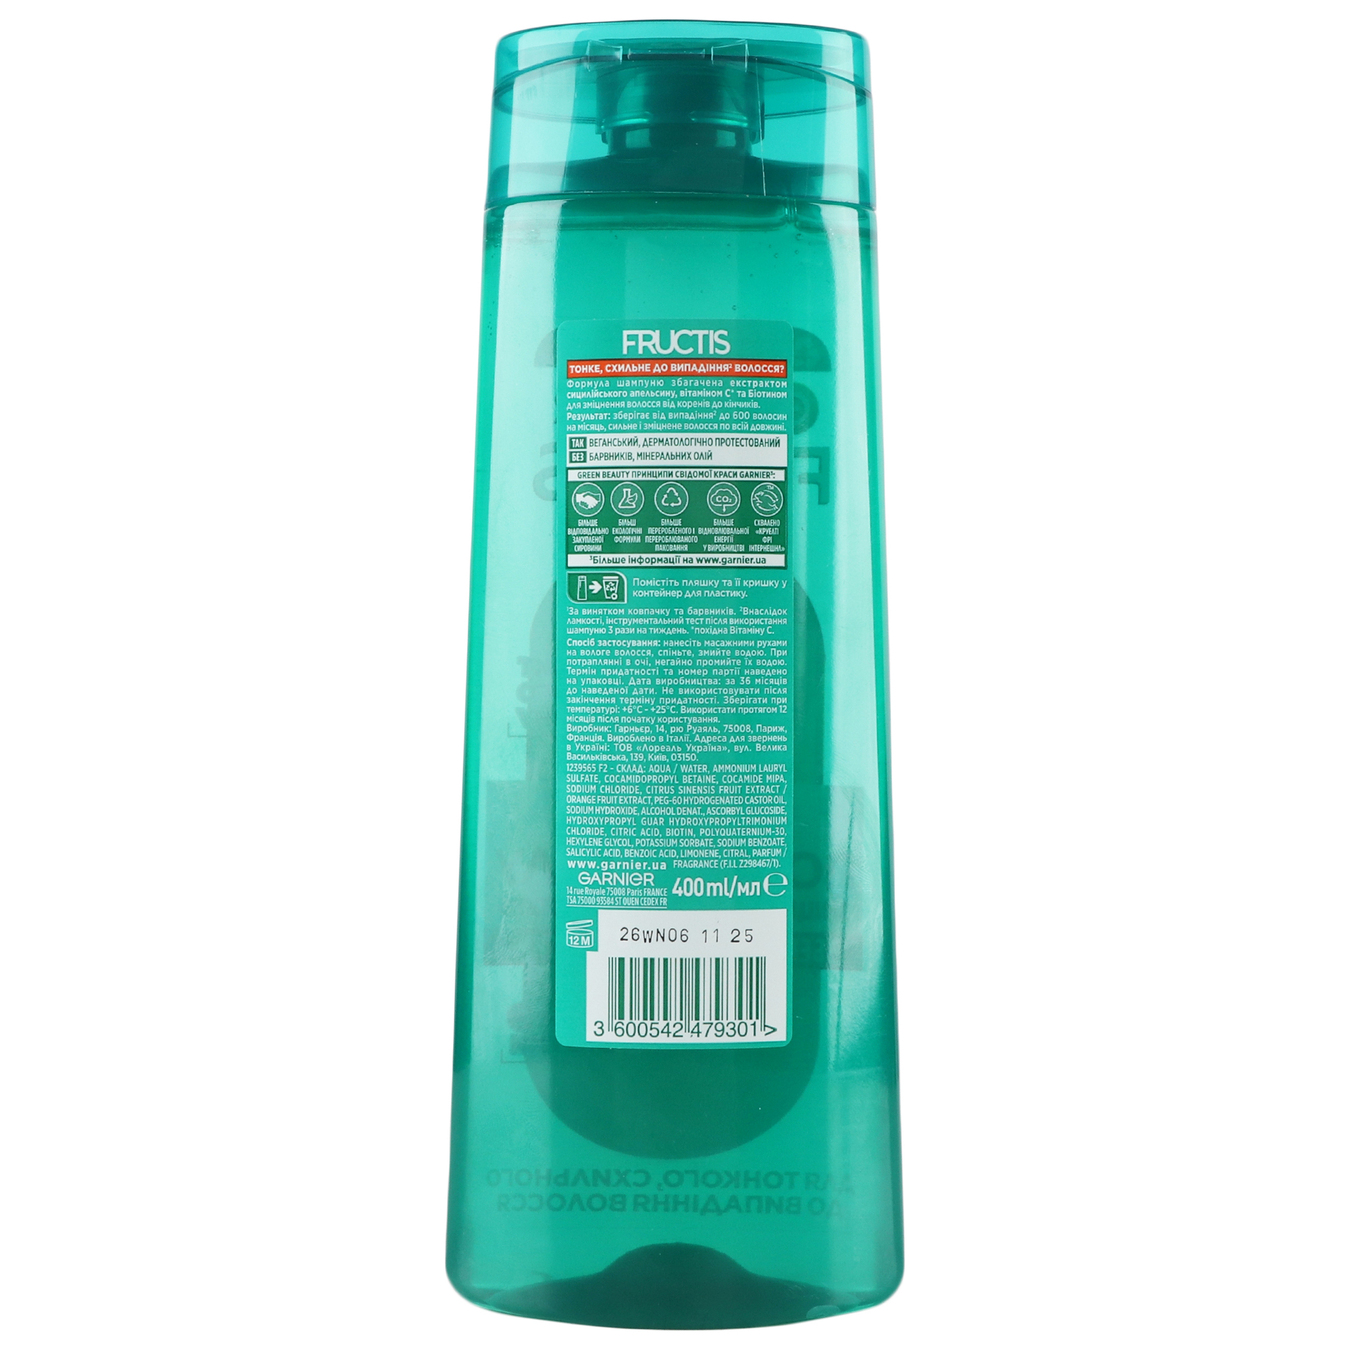 Fructis shampoo for weakened hair prone to hair loss, full strength growth 400ml 2